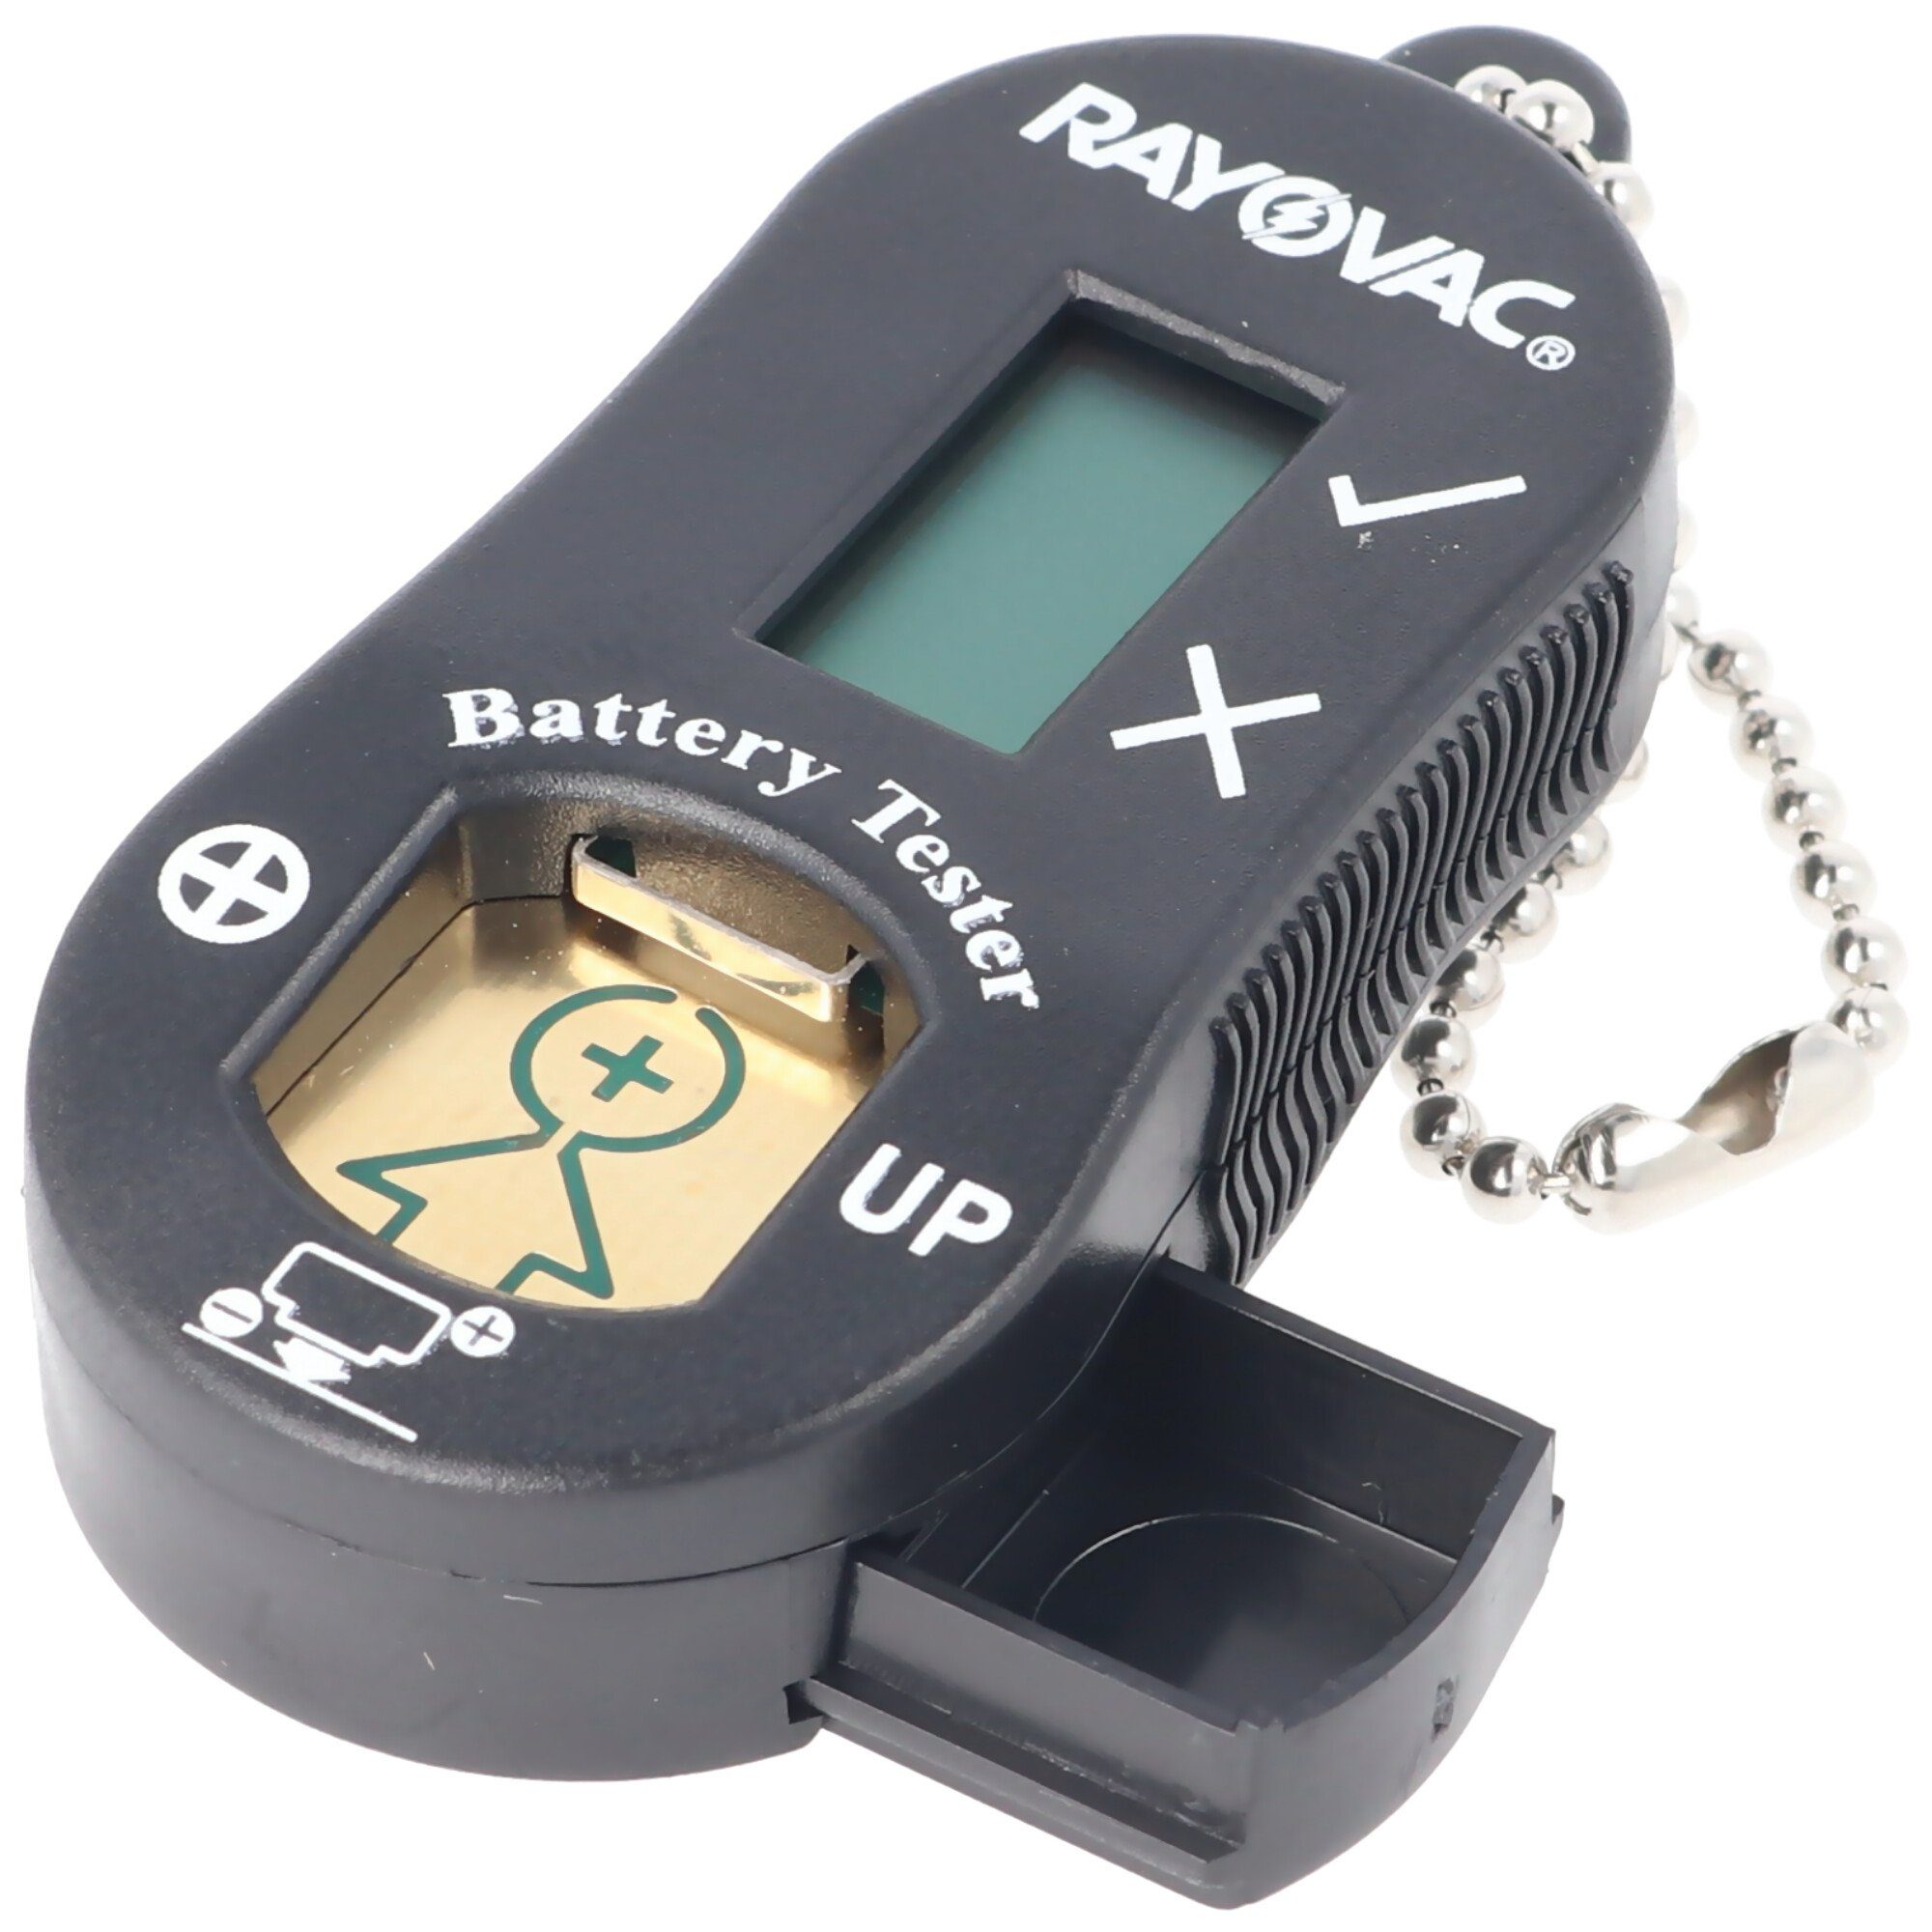 RAYOVAC Batterietester für Hörgerätebatterien mit Batterieaufbewahrungsbox, p Batterie